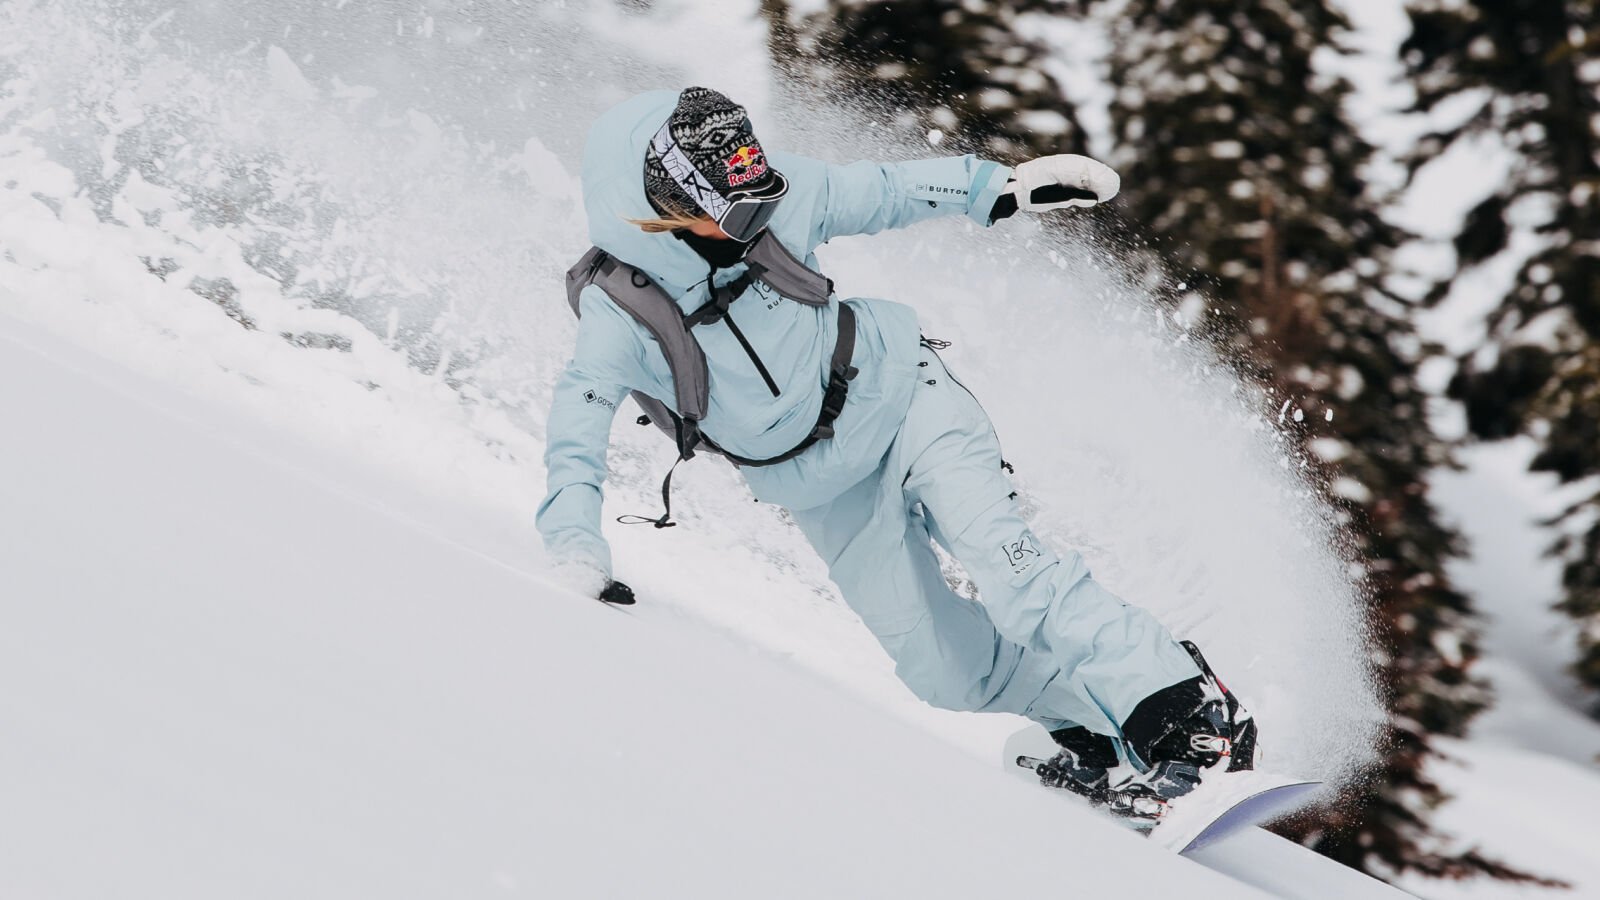 Burton Global Team: Anna Gasser | Burton Snowboard